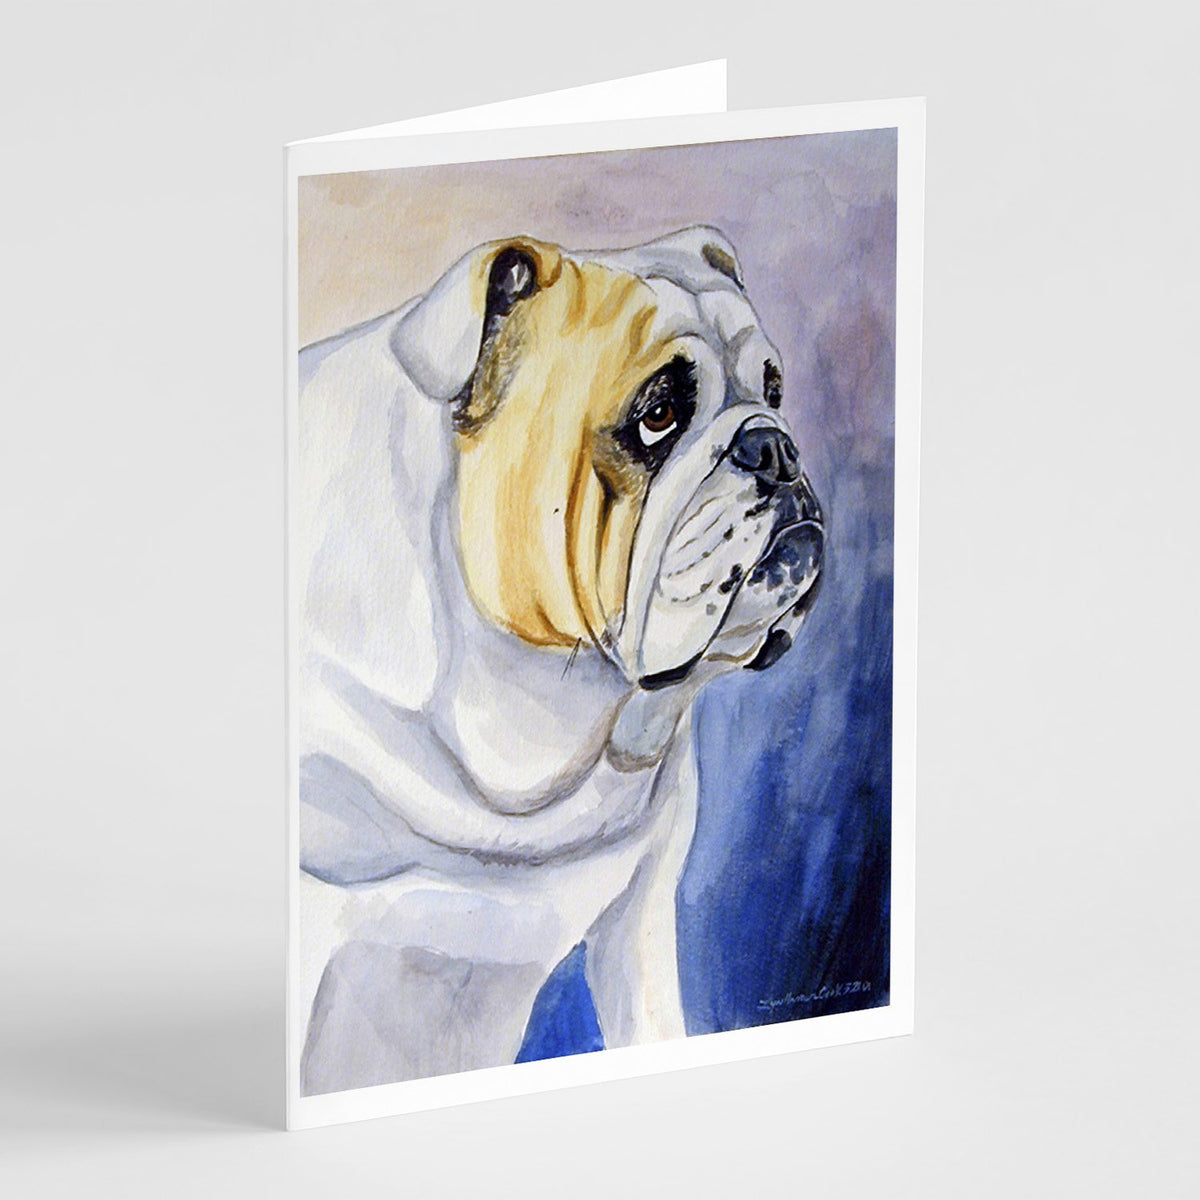 Buy this English Bulldog Greeting Cards and Envelopes Pack of 8